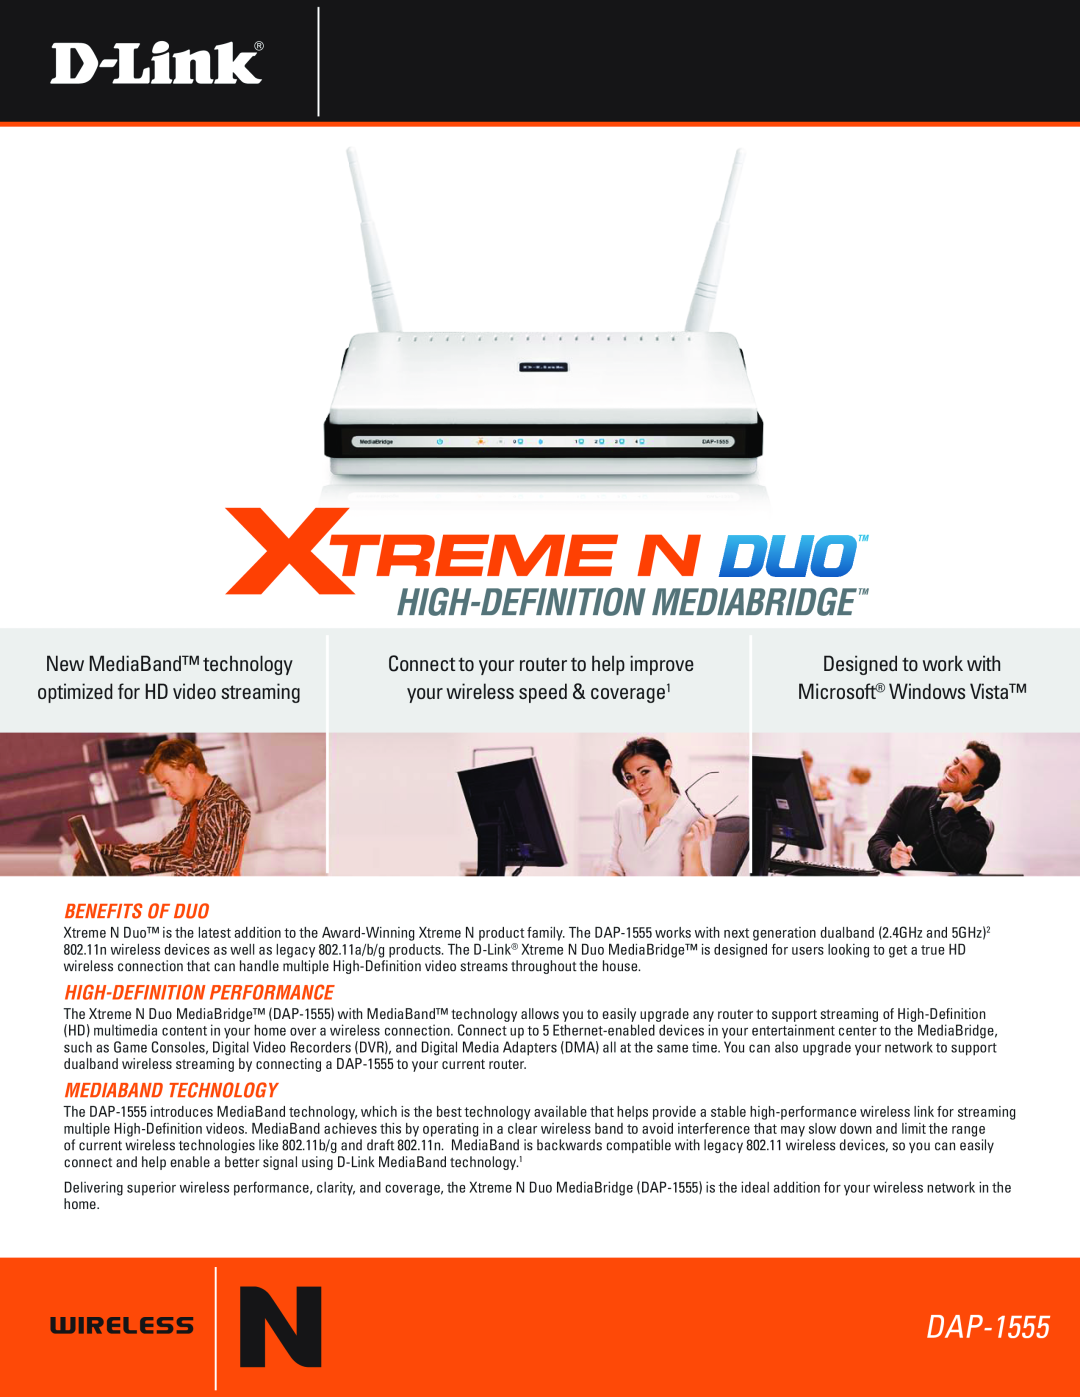 D-Link DAP-1555 manual Benefits Of Duo, High-Definition Performance, Mediaband Technology 